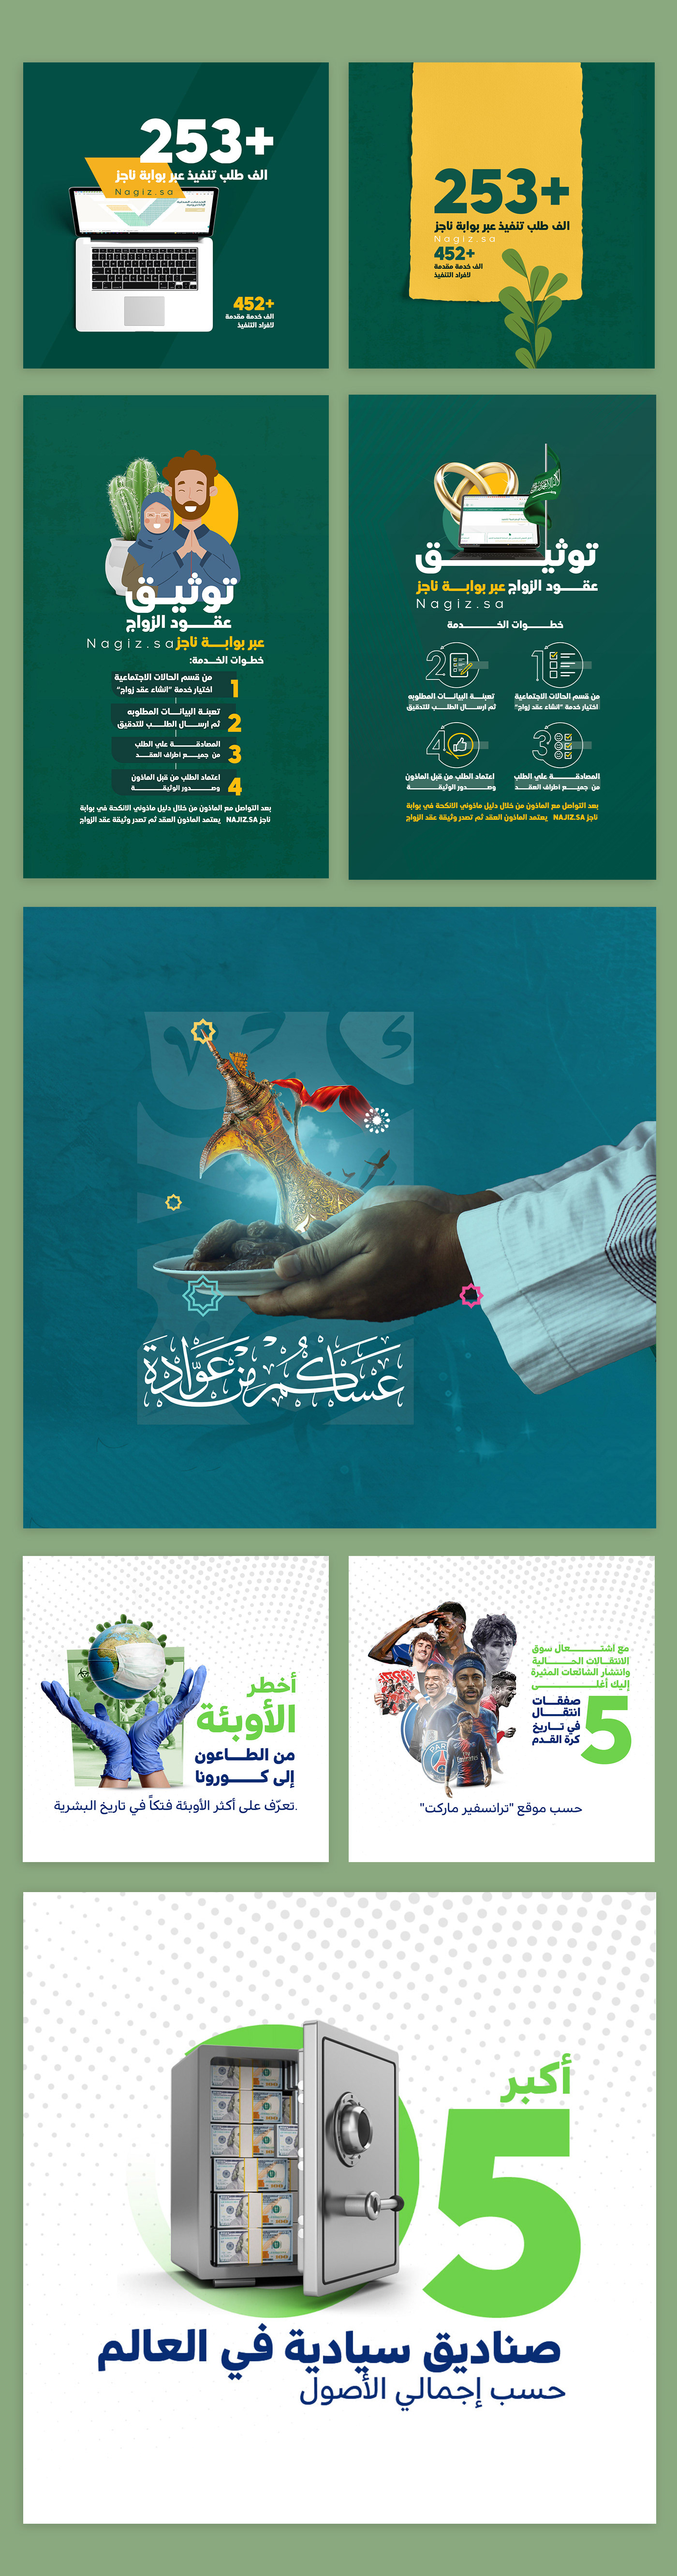 Digital Art  digital marketing infographic KSA marketing   Saudi Arabia saudi national day saudiarabia social media اليوم الوطني السعودي 91